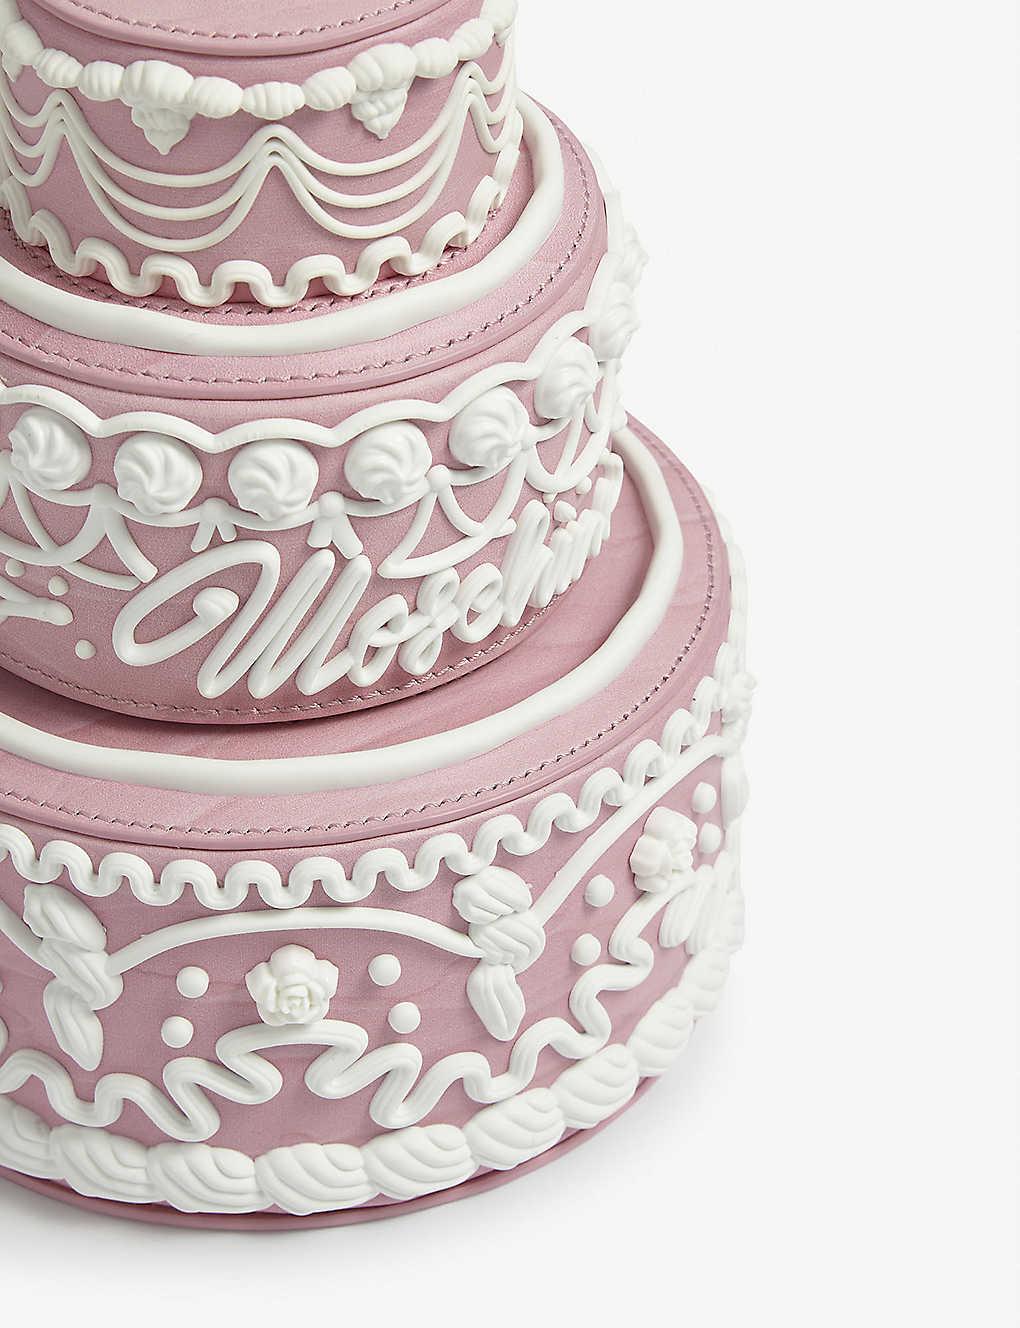 Moschino Tiered Cake Vinyl Clutch in Pink | Lyst